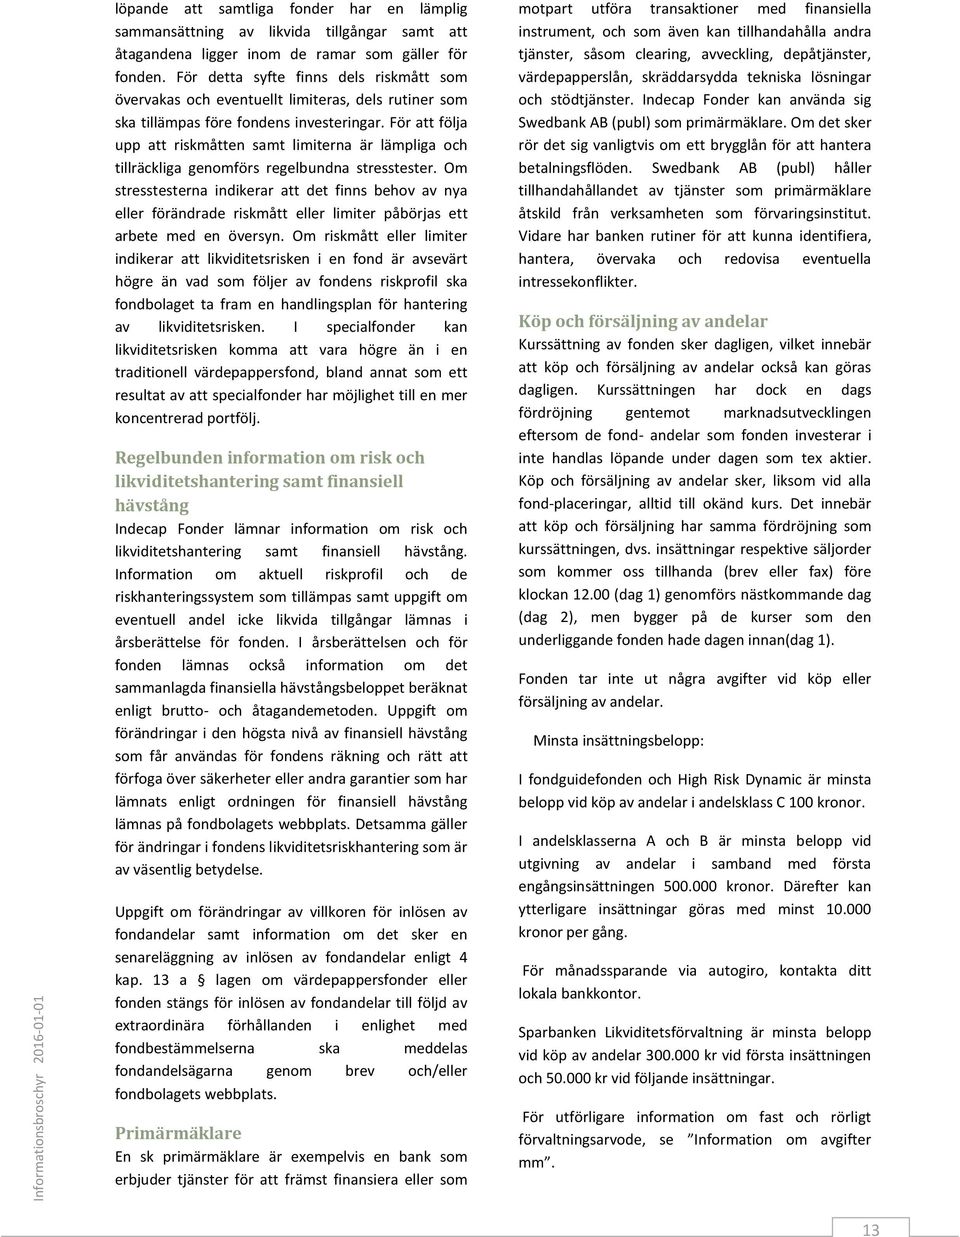 INFORMATIONSBROSCHYR INDECAP FONDER AB - PDF Free Download